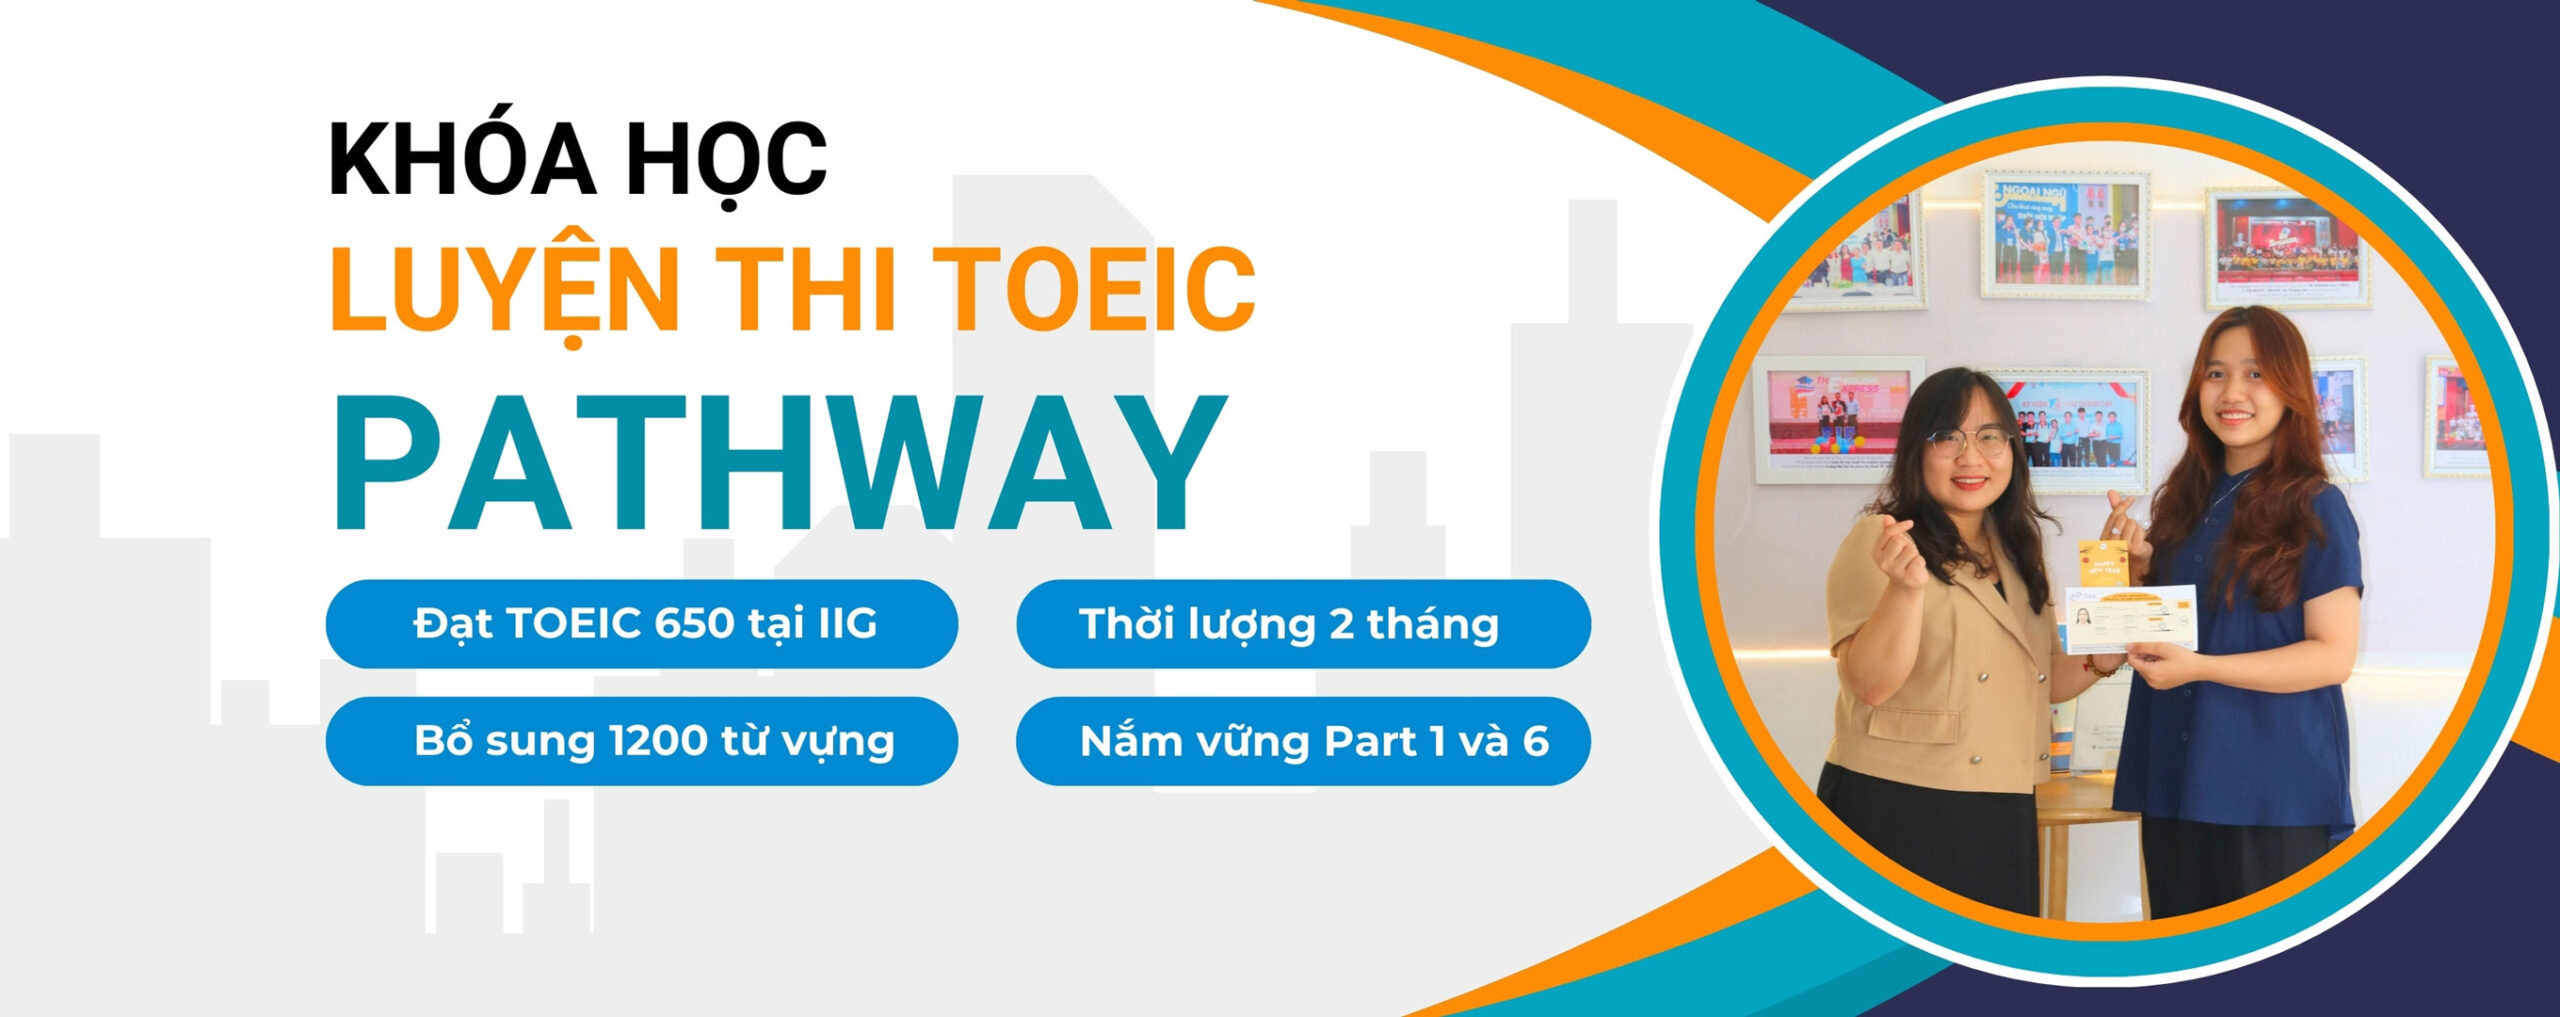 Khóa học luyện thi TOEIC Pathway cam kết TOEIC 650